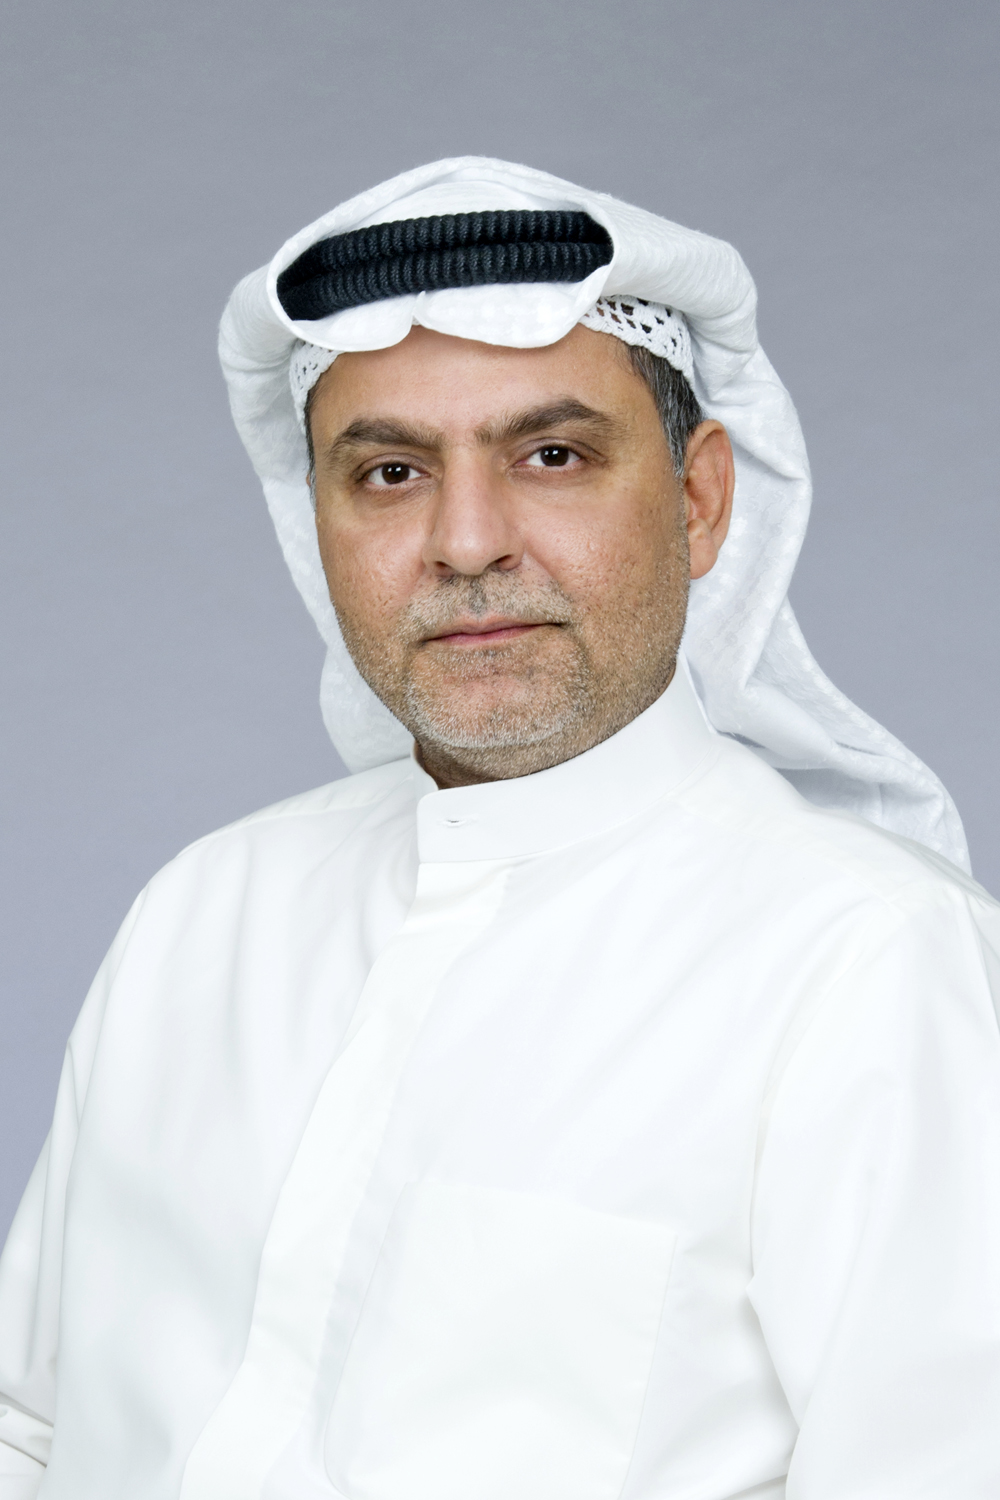 KIPCO's Chief Executive Officer - Investments Tariq AbdulSalam